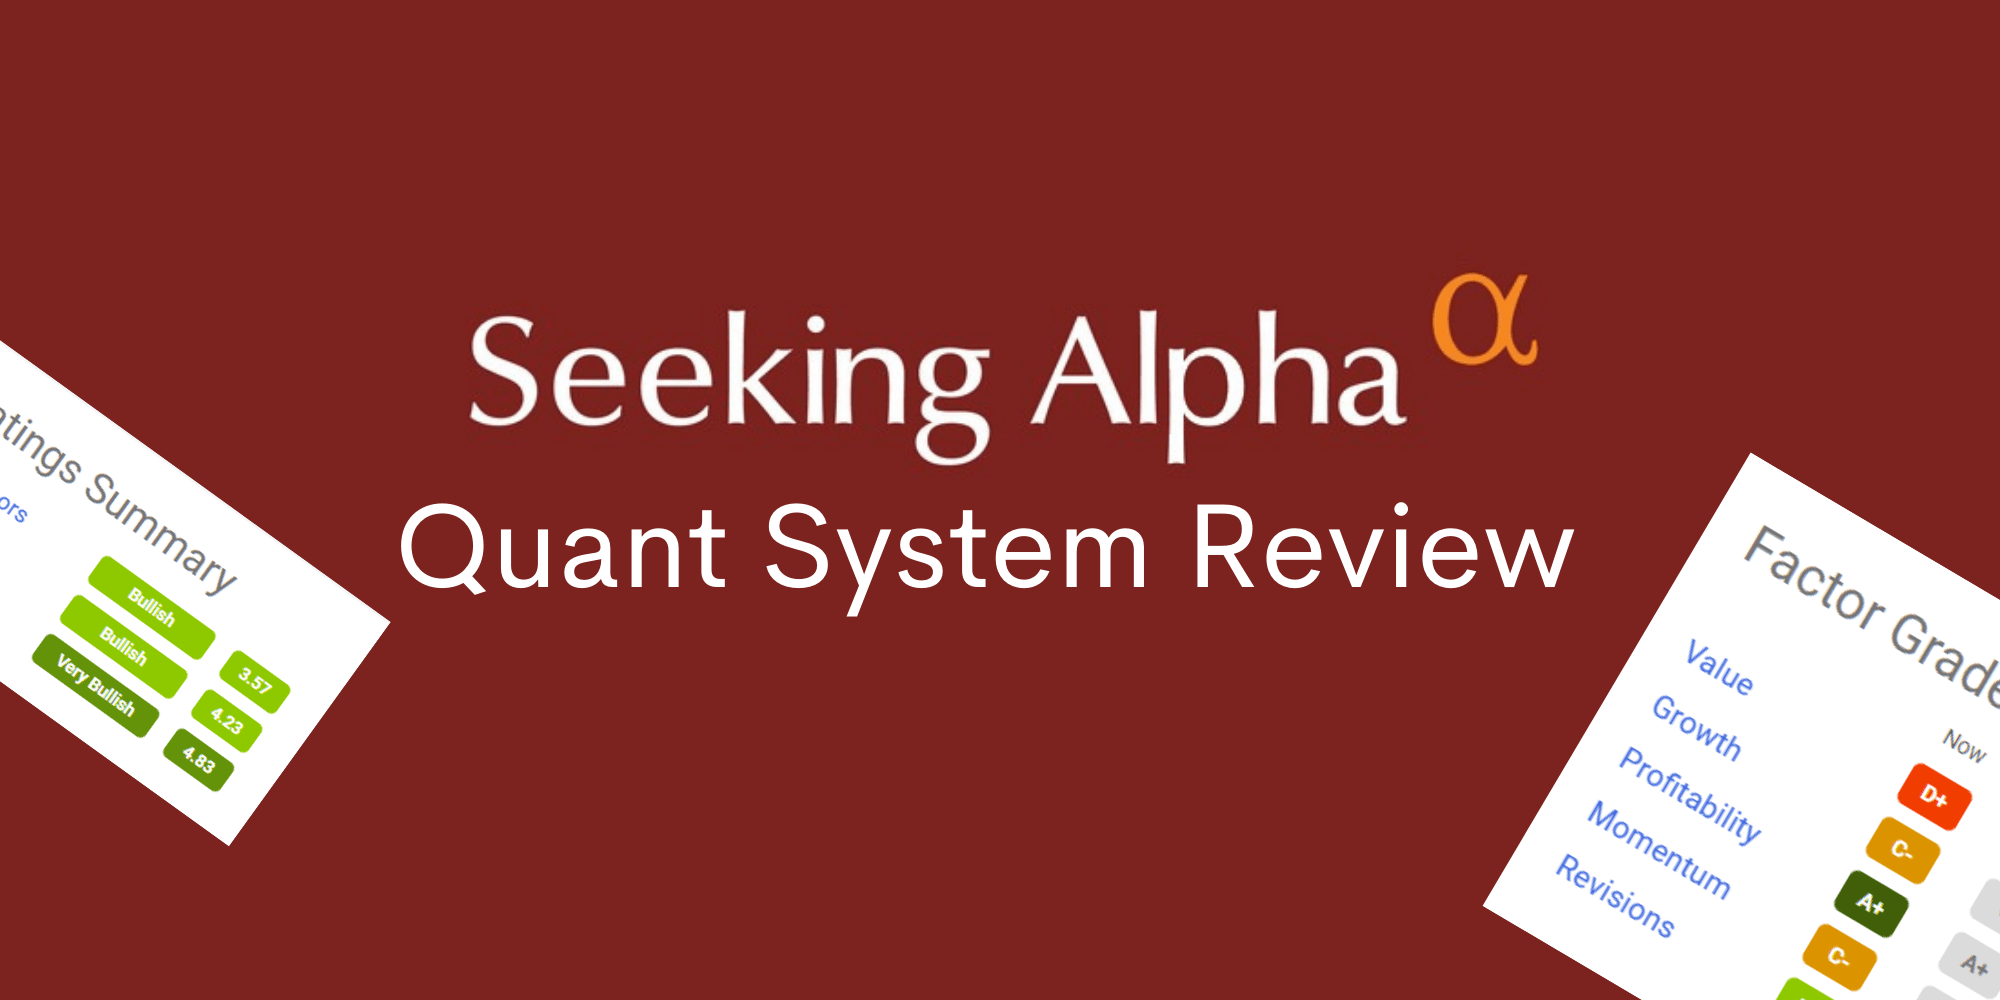 Seeking Alpha Premium Review